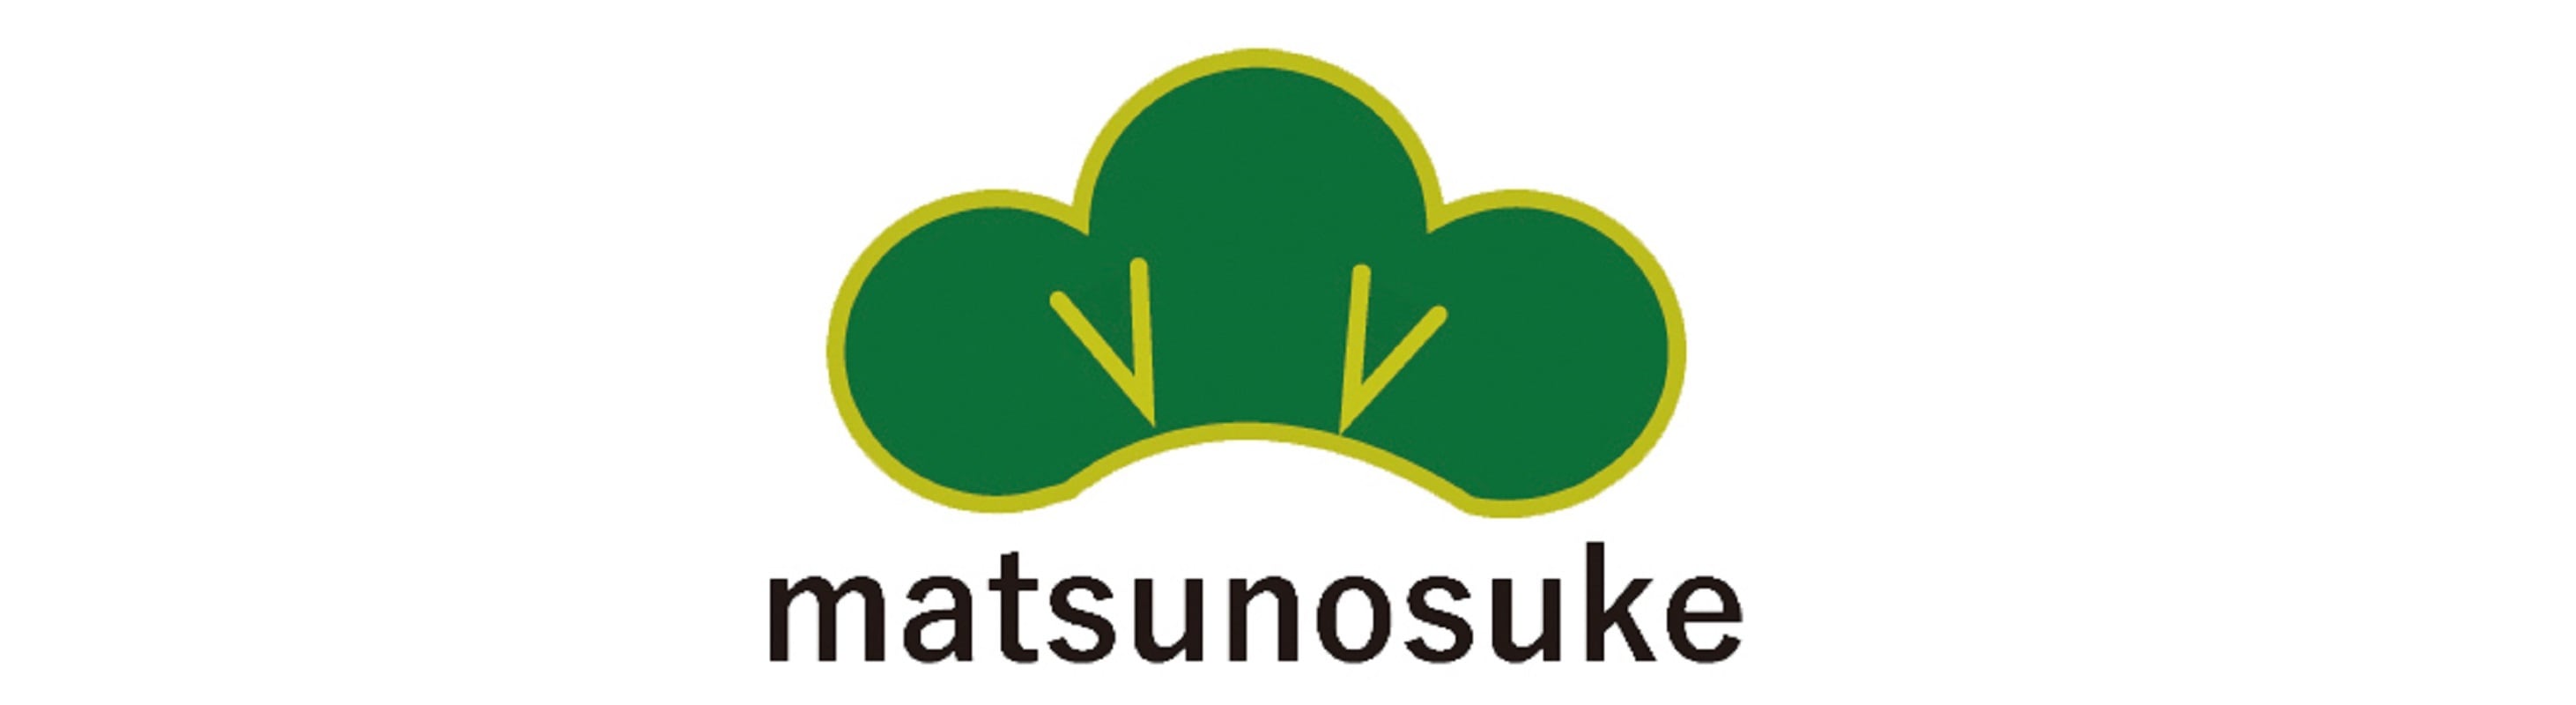 matsunosuke